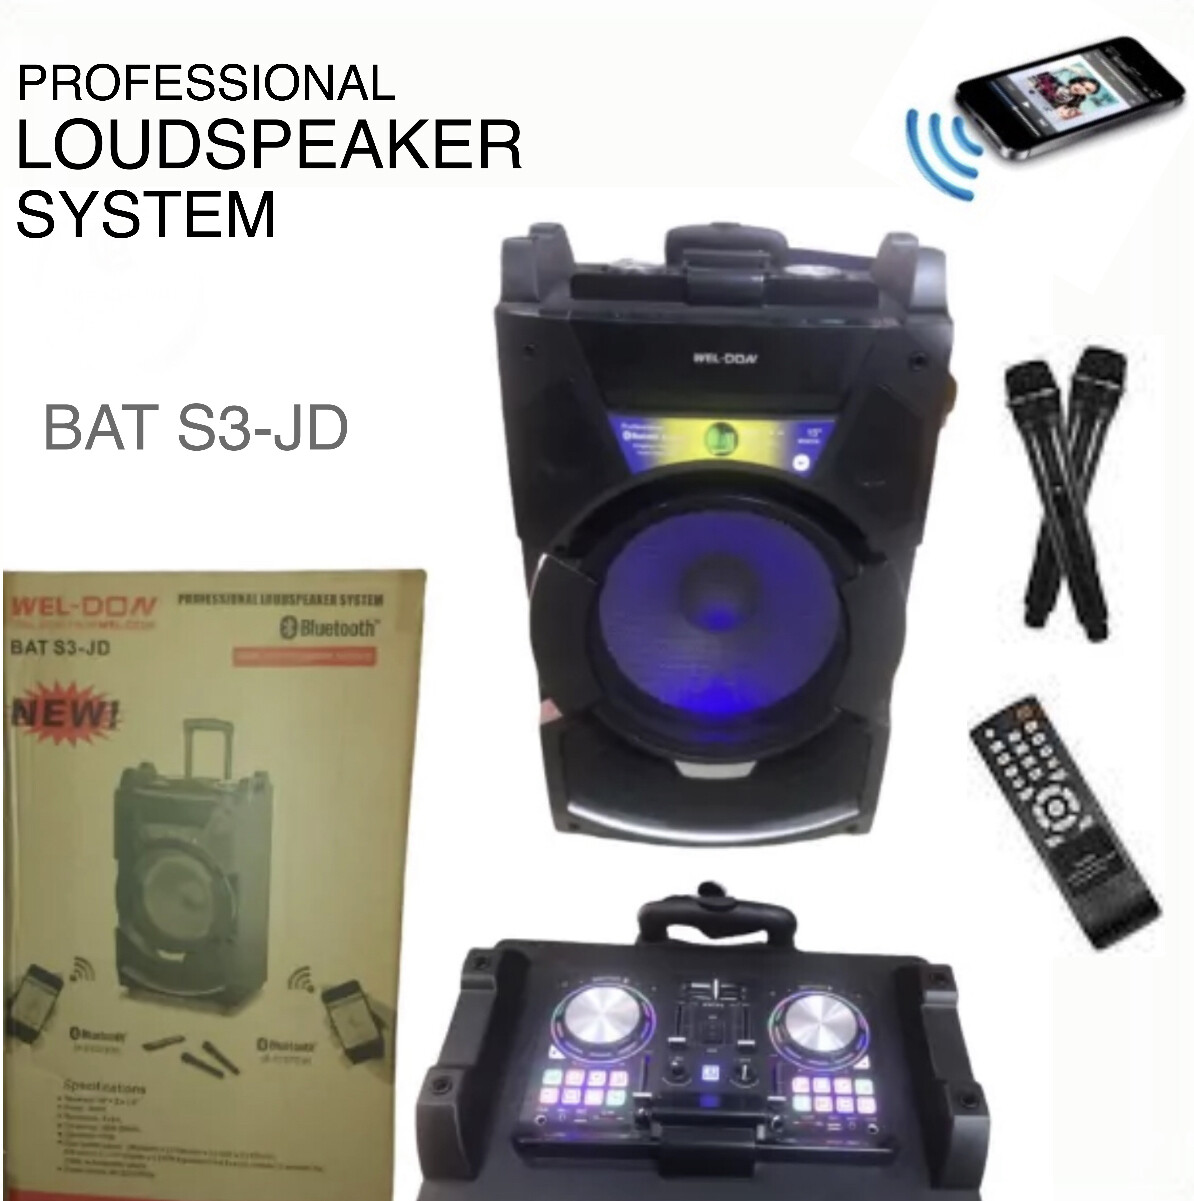 Loudspeaker System